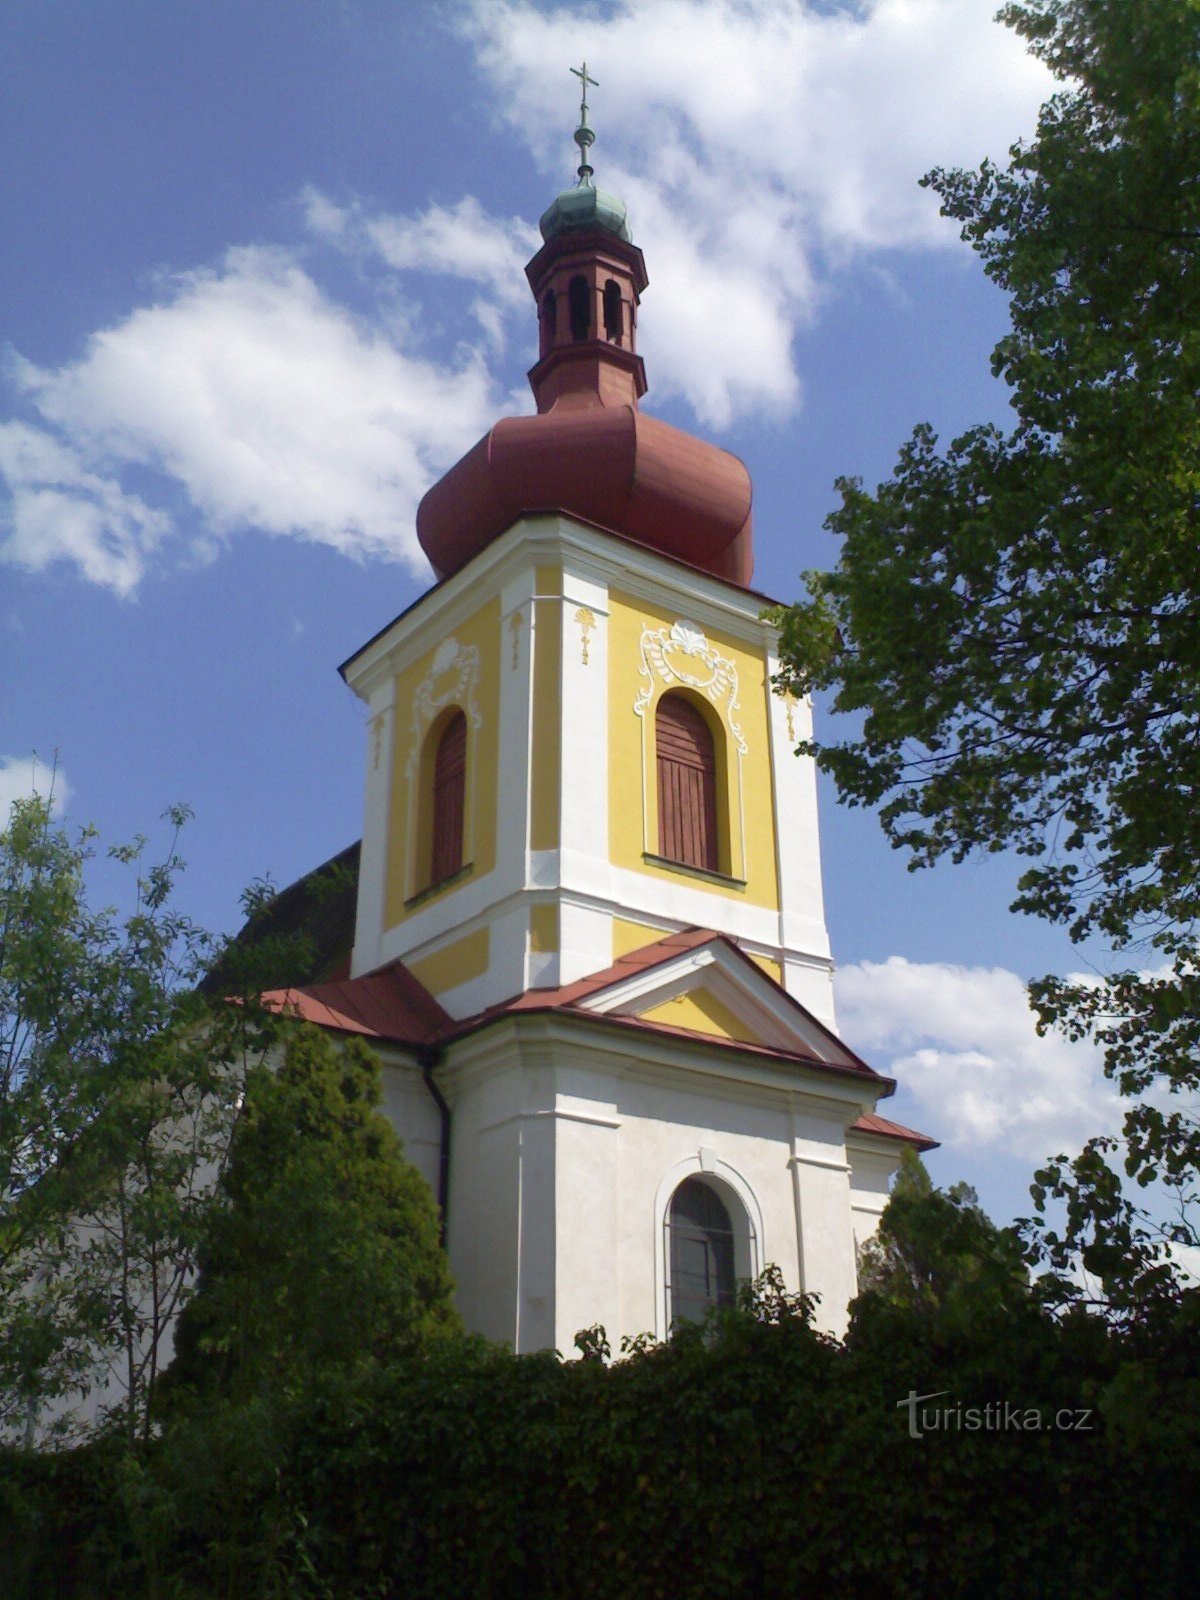 Křivice - kerk van St. Laurentius